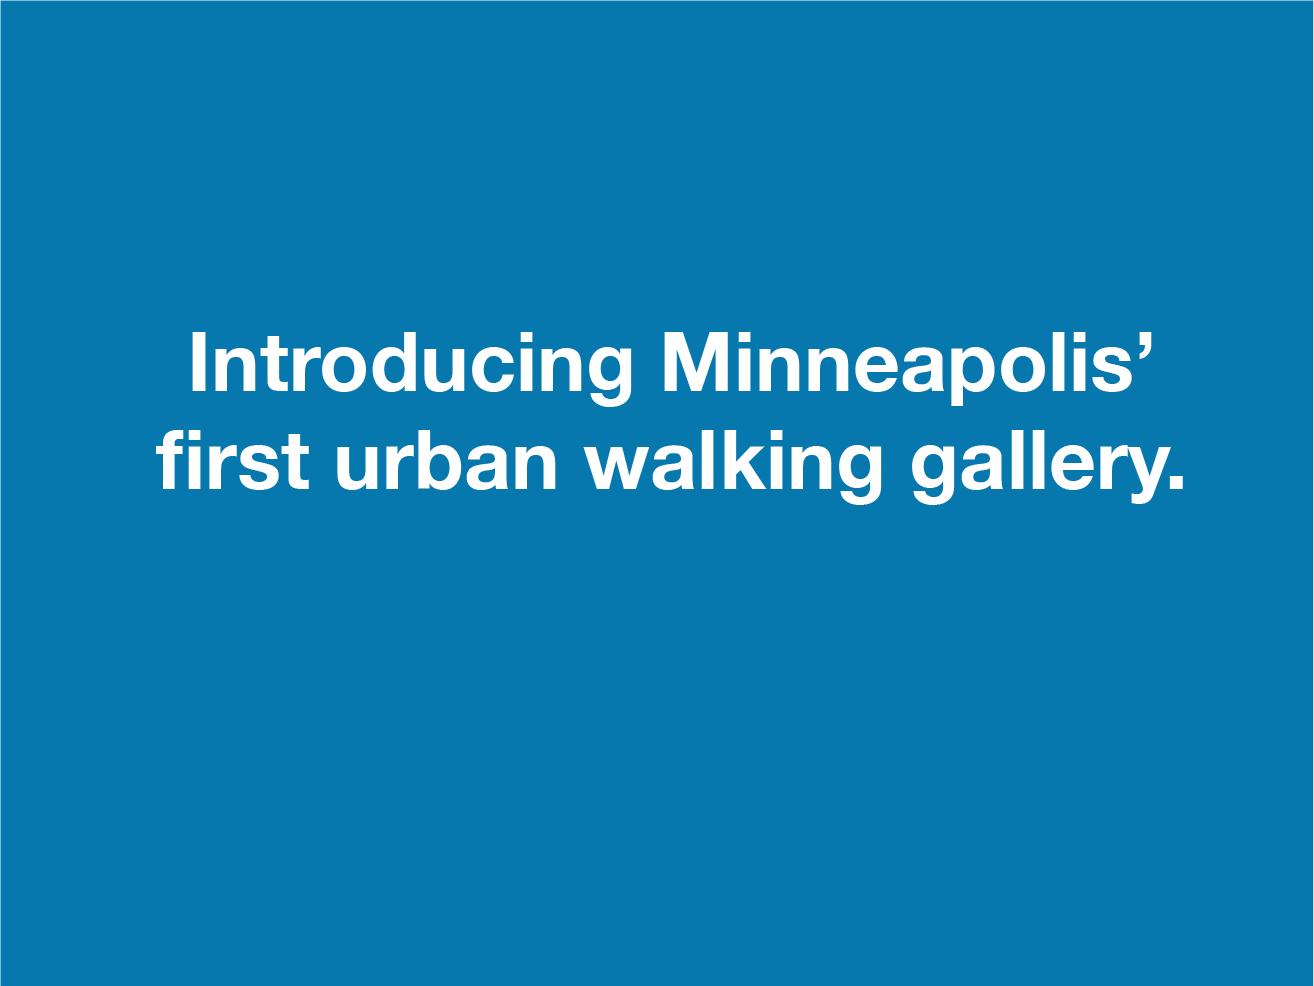 MadeHere_Introducing Minneapolis' first urban walking gallerywalkingtour